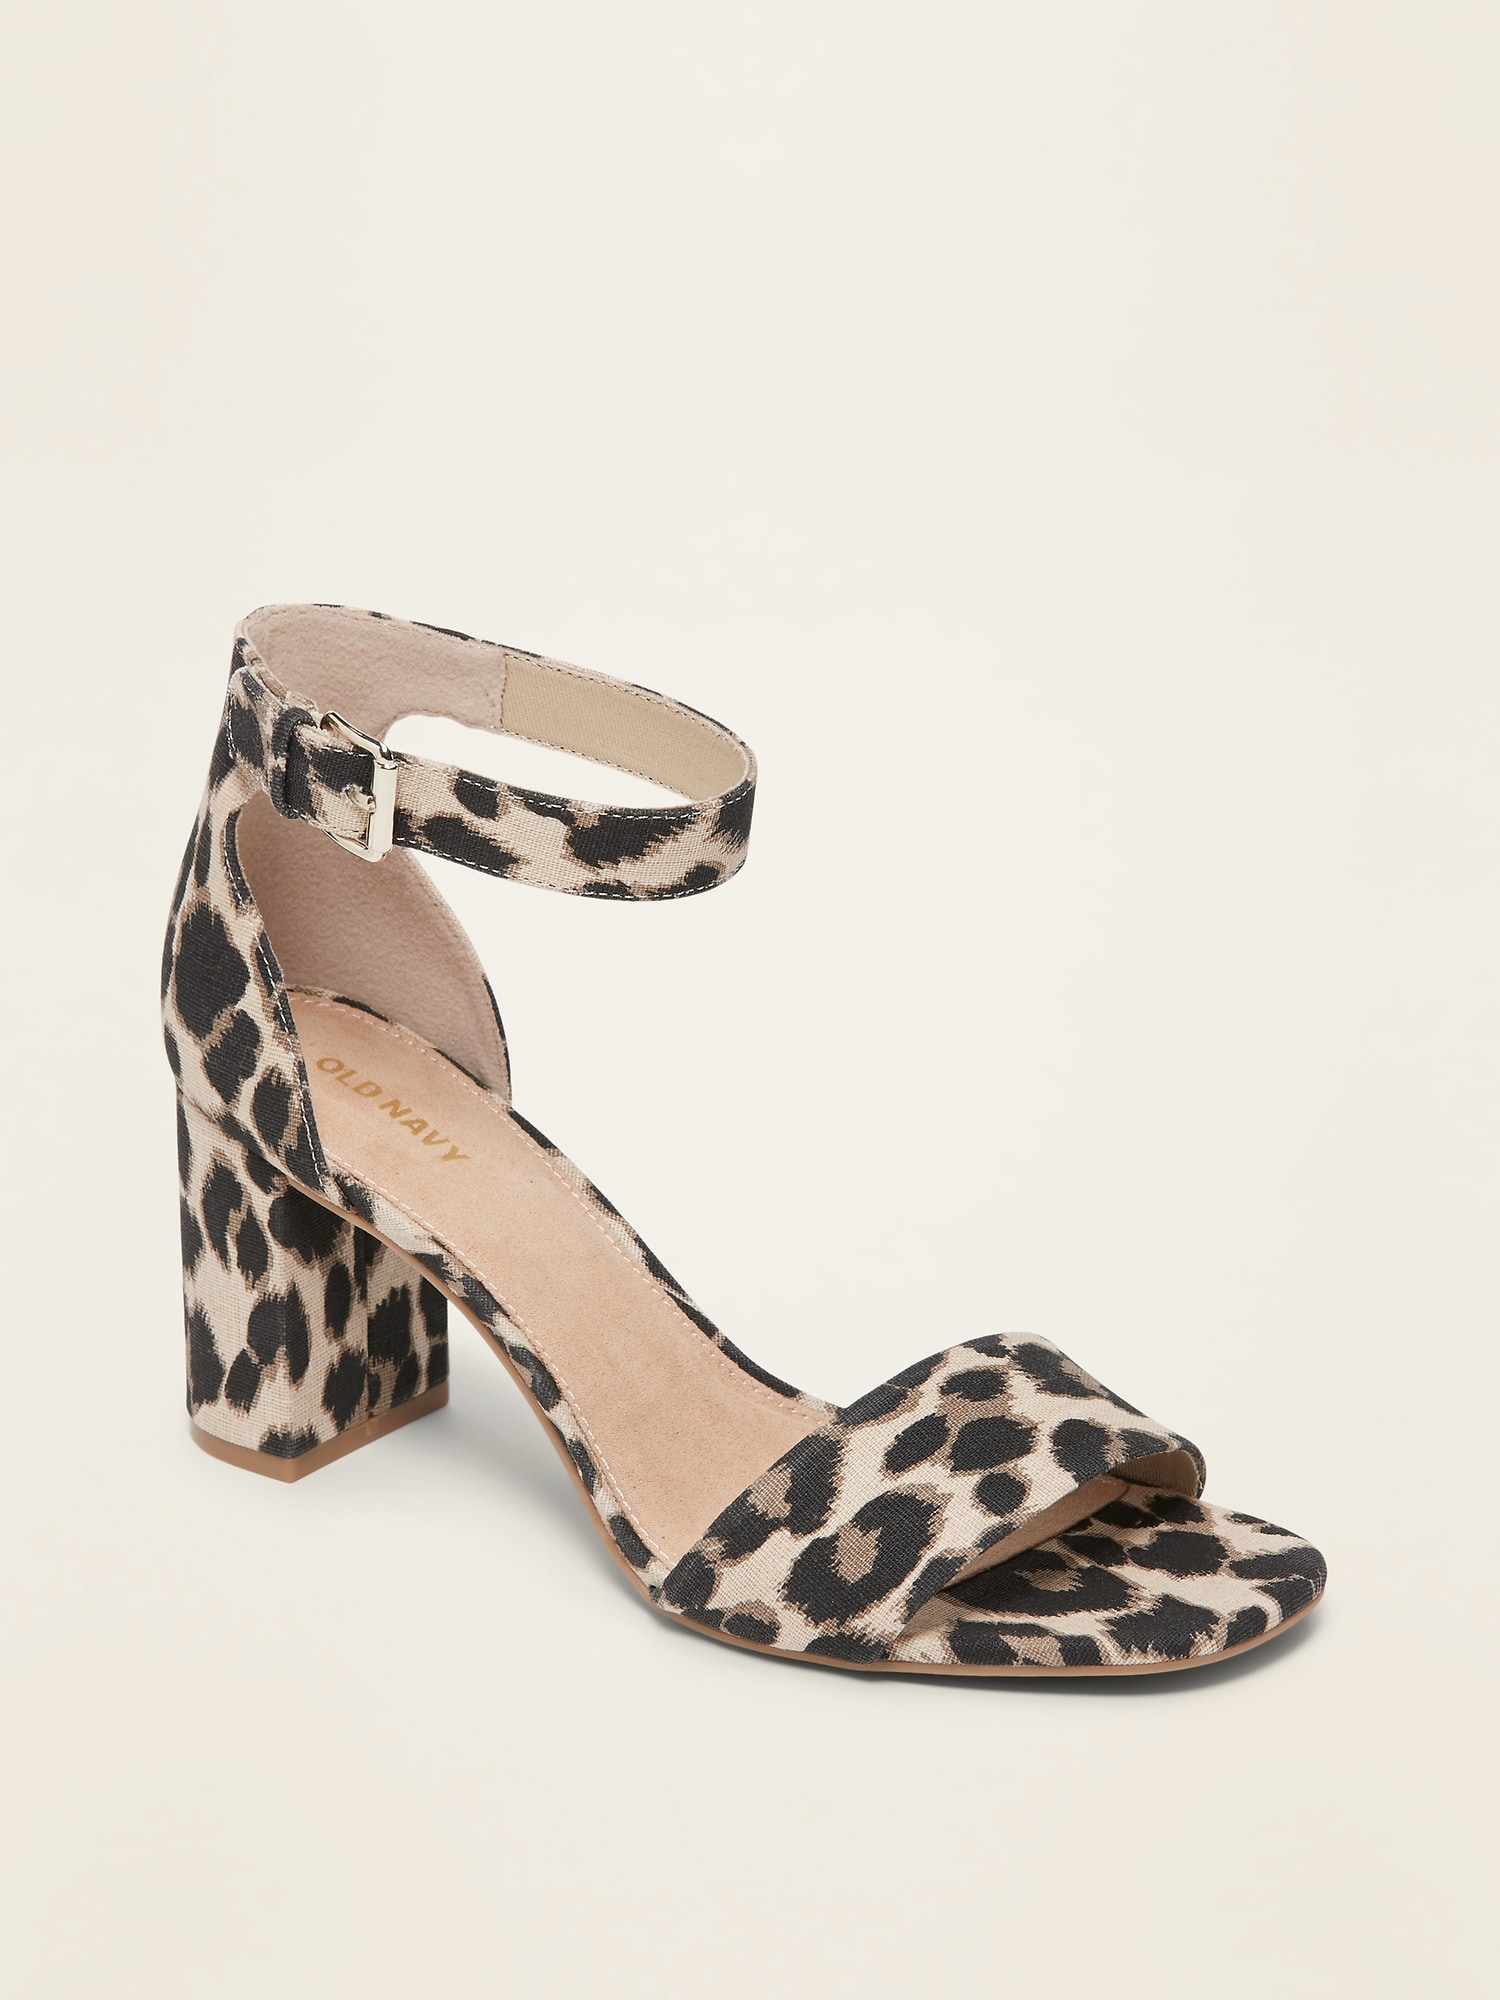 leopard high heel sandals